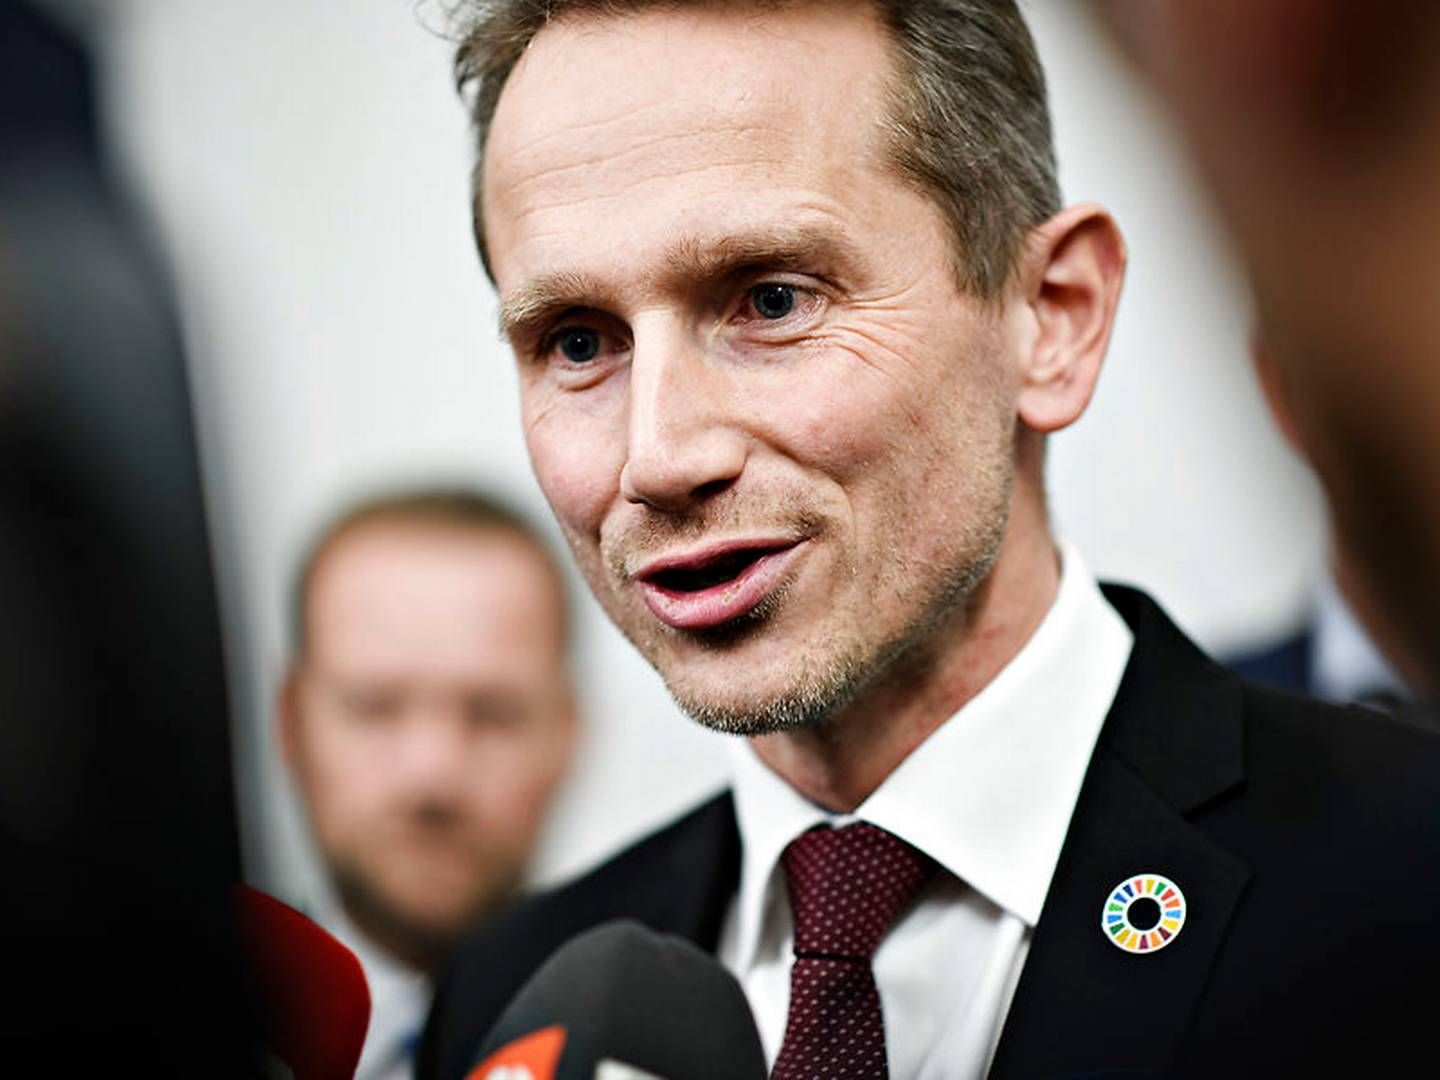 Finansminister Kristian Jensen (V) kritiserer finanseringen i Socialdemokratiets pensionsudspil. | Foto: Ritzau Scanpix/Philip Davali